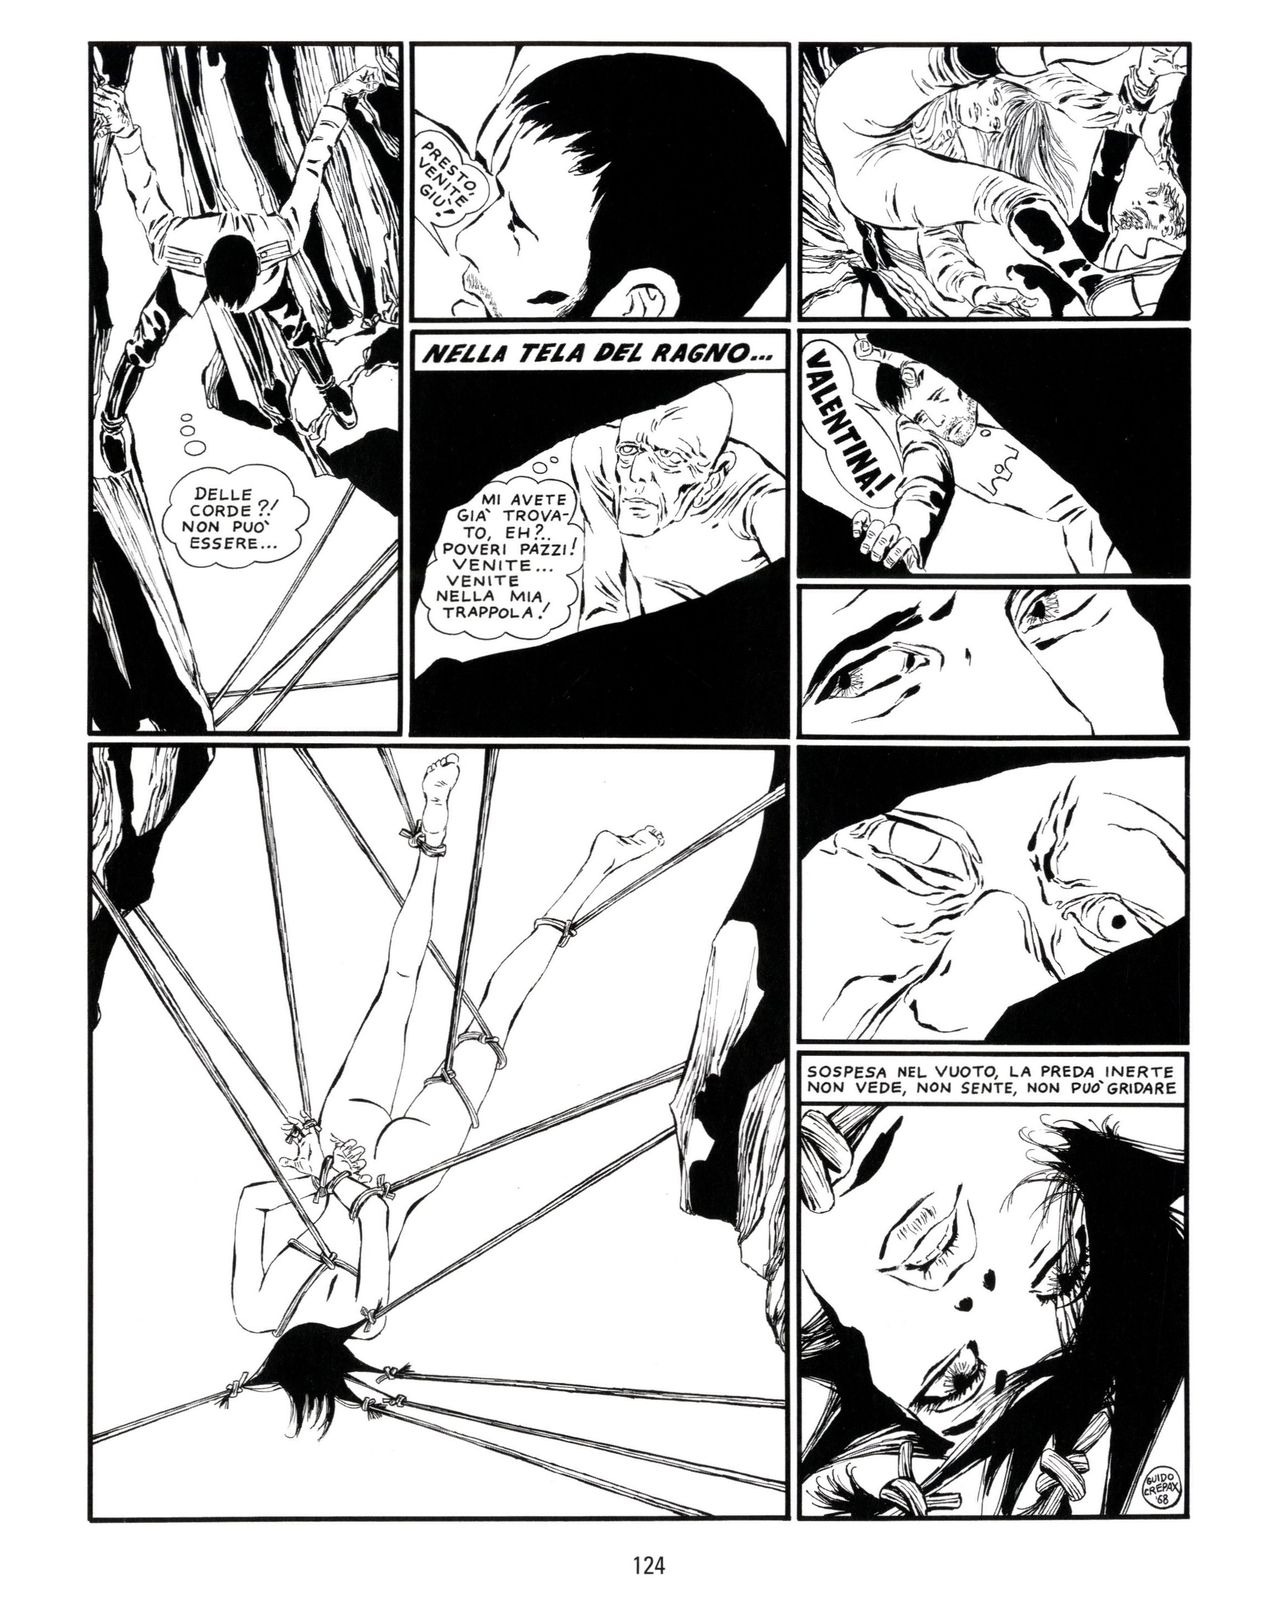 [Guido Crepax] Erotica Fumetti #25 : L'ascesa dei sotterranei : I cavalieri ciechi [Italian] 125